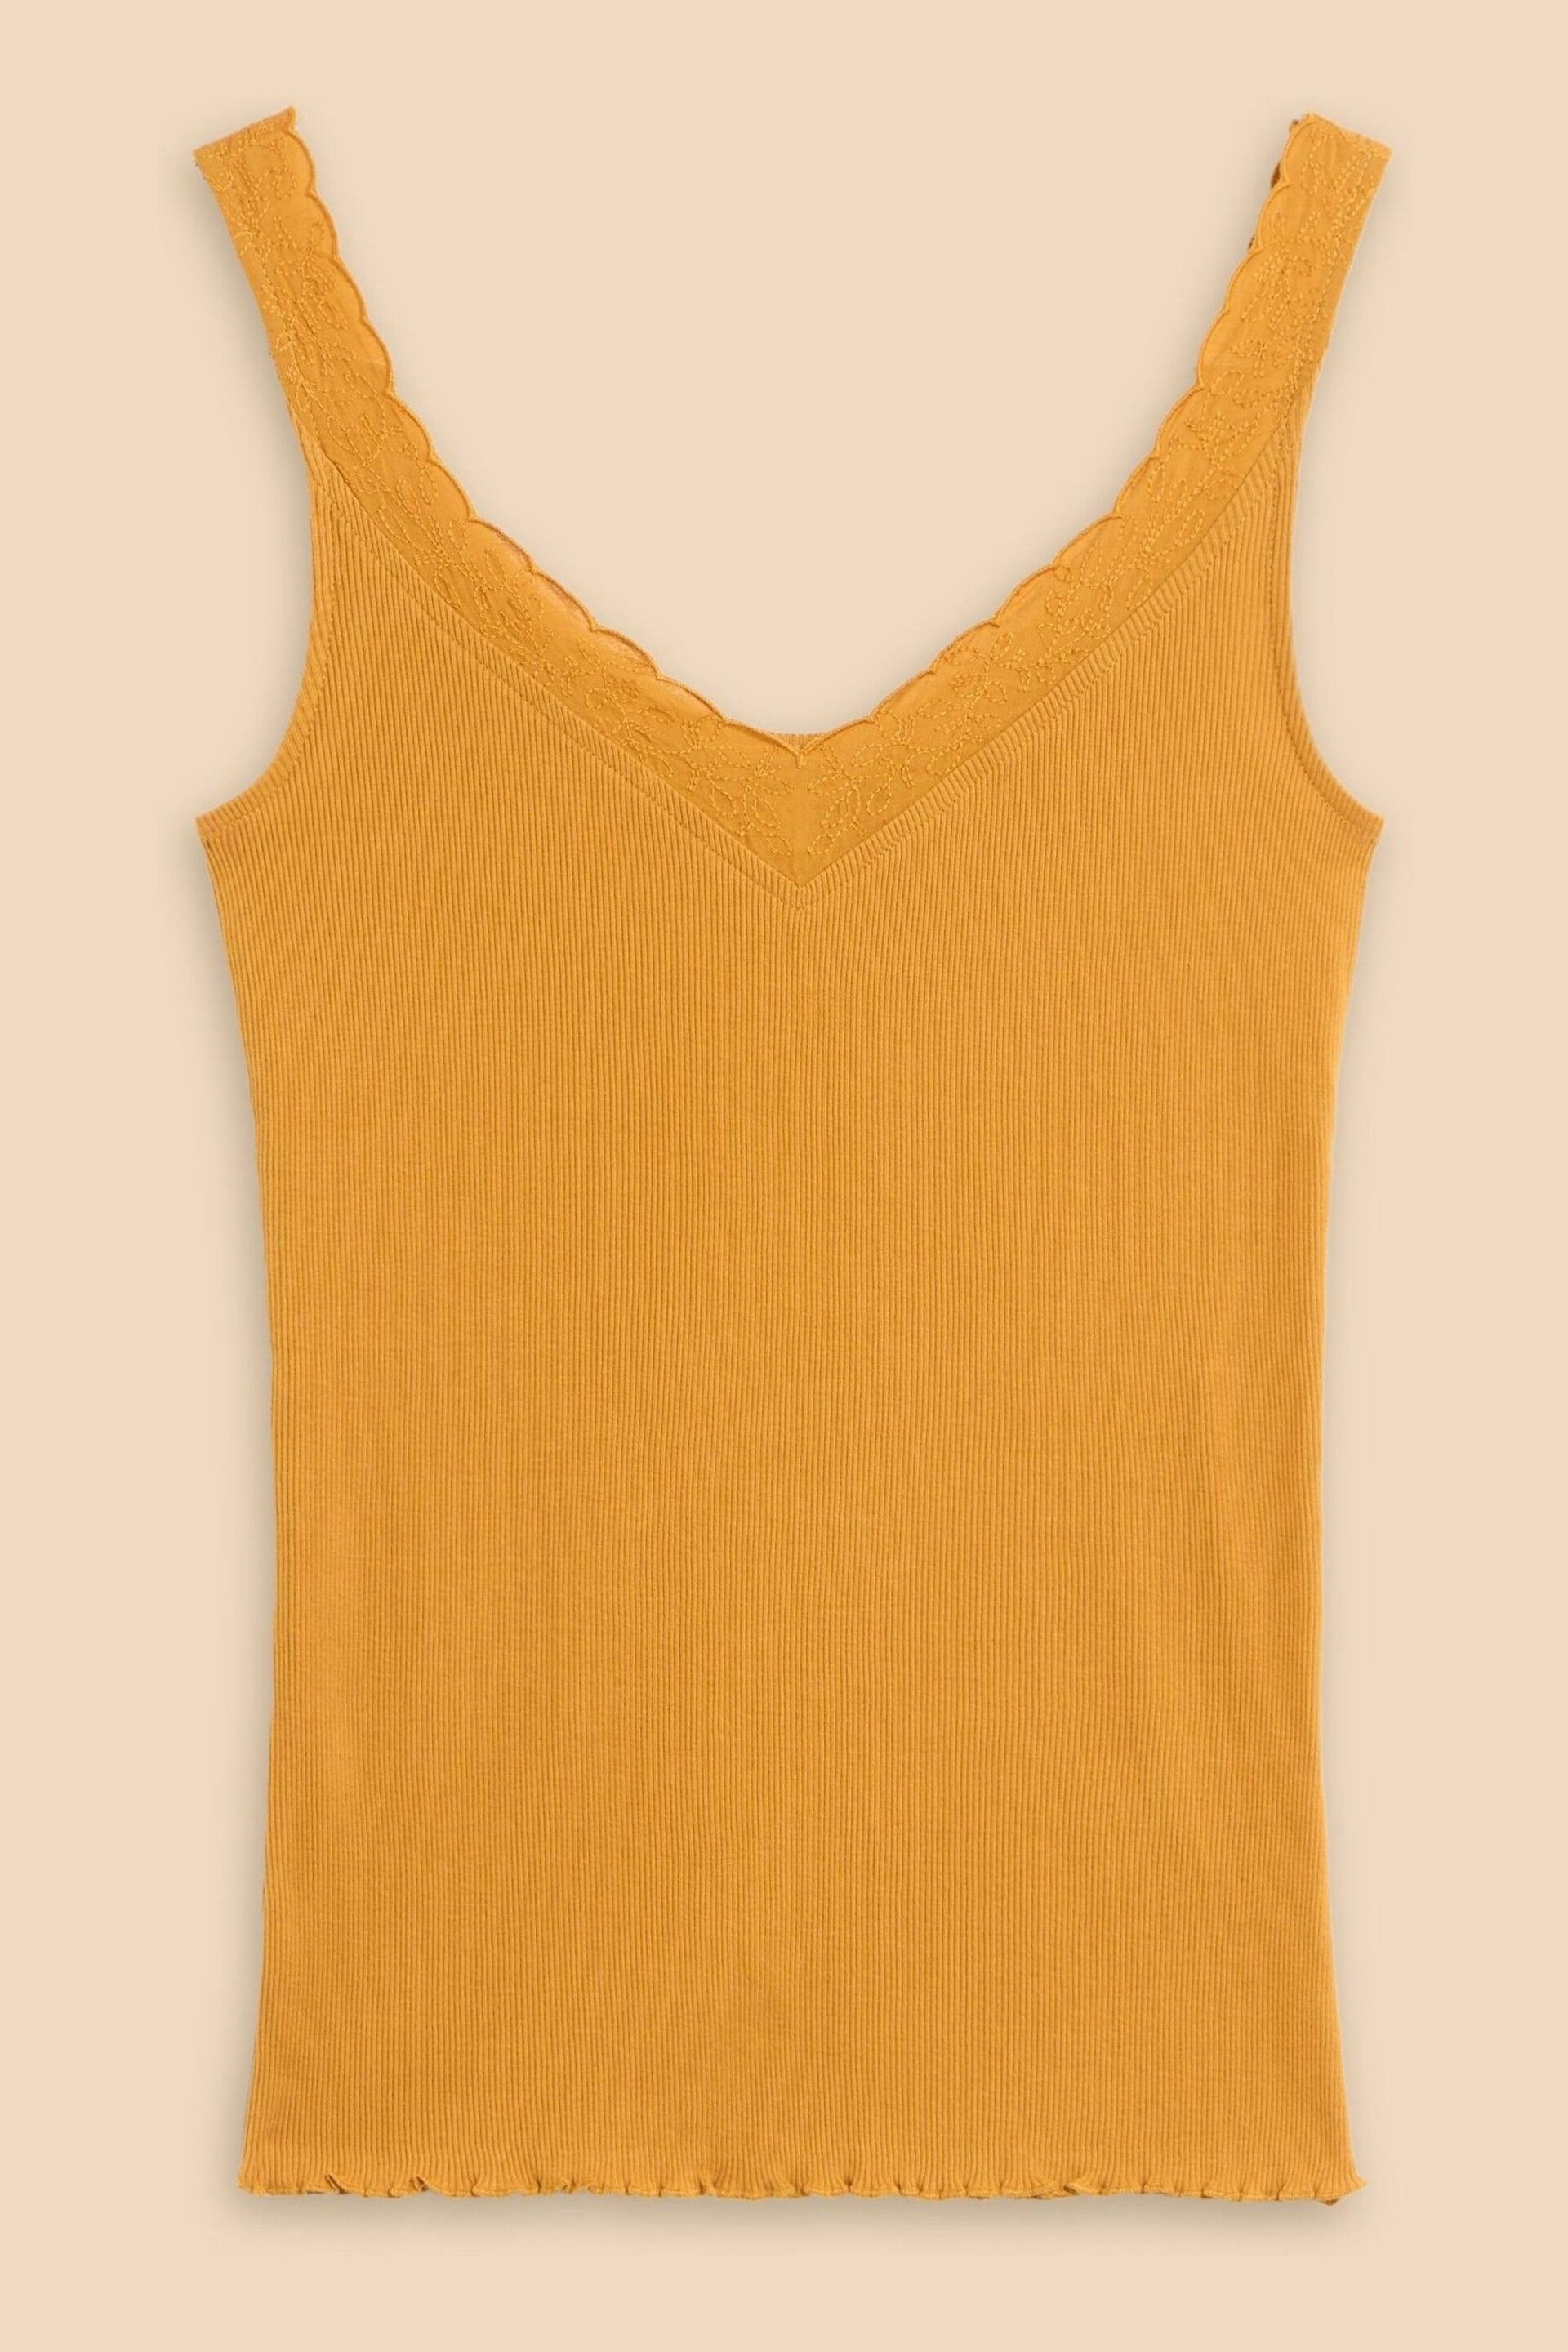 White Stuff Orange Seabreeze Vest - Image 5 of 7